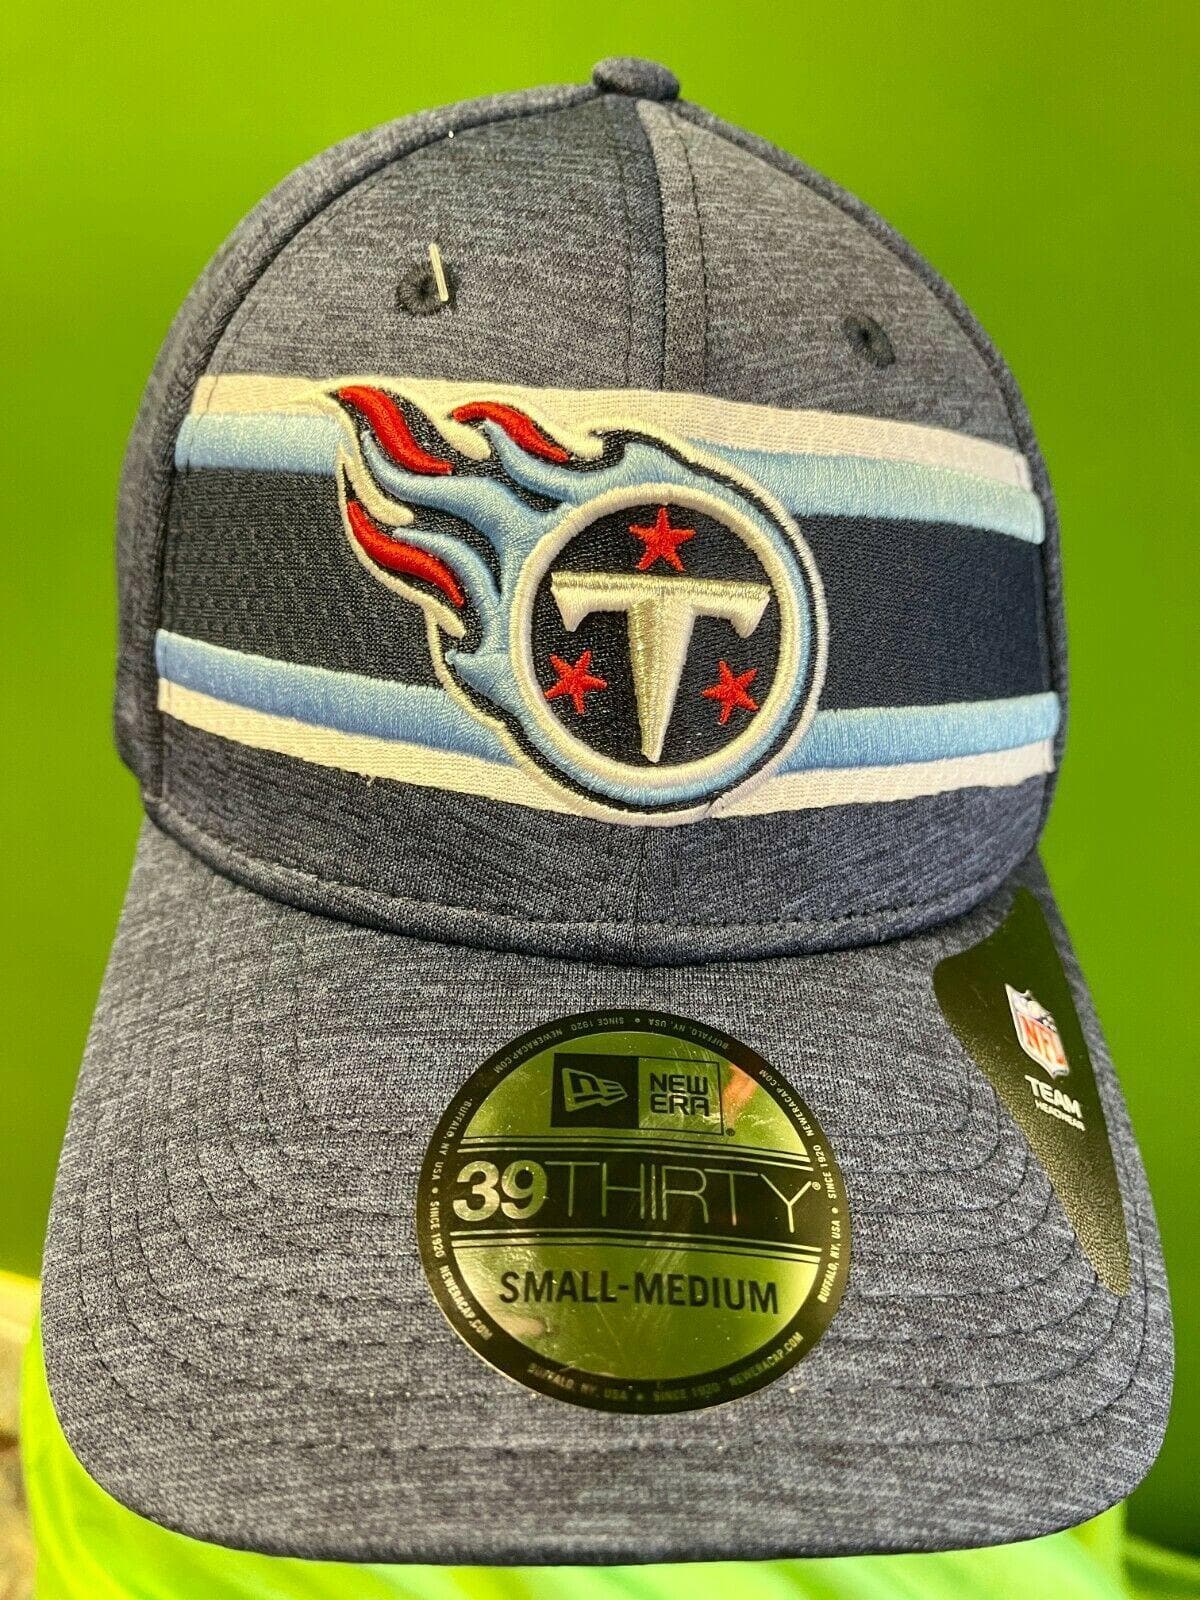 NFL Tennessee Titans New Era 39THIRTY Hat-Cap Small-Medium NWT